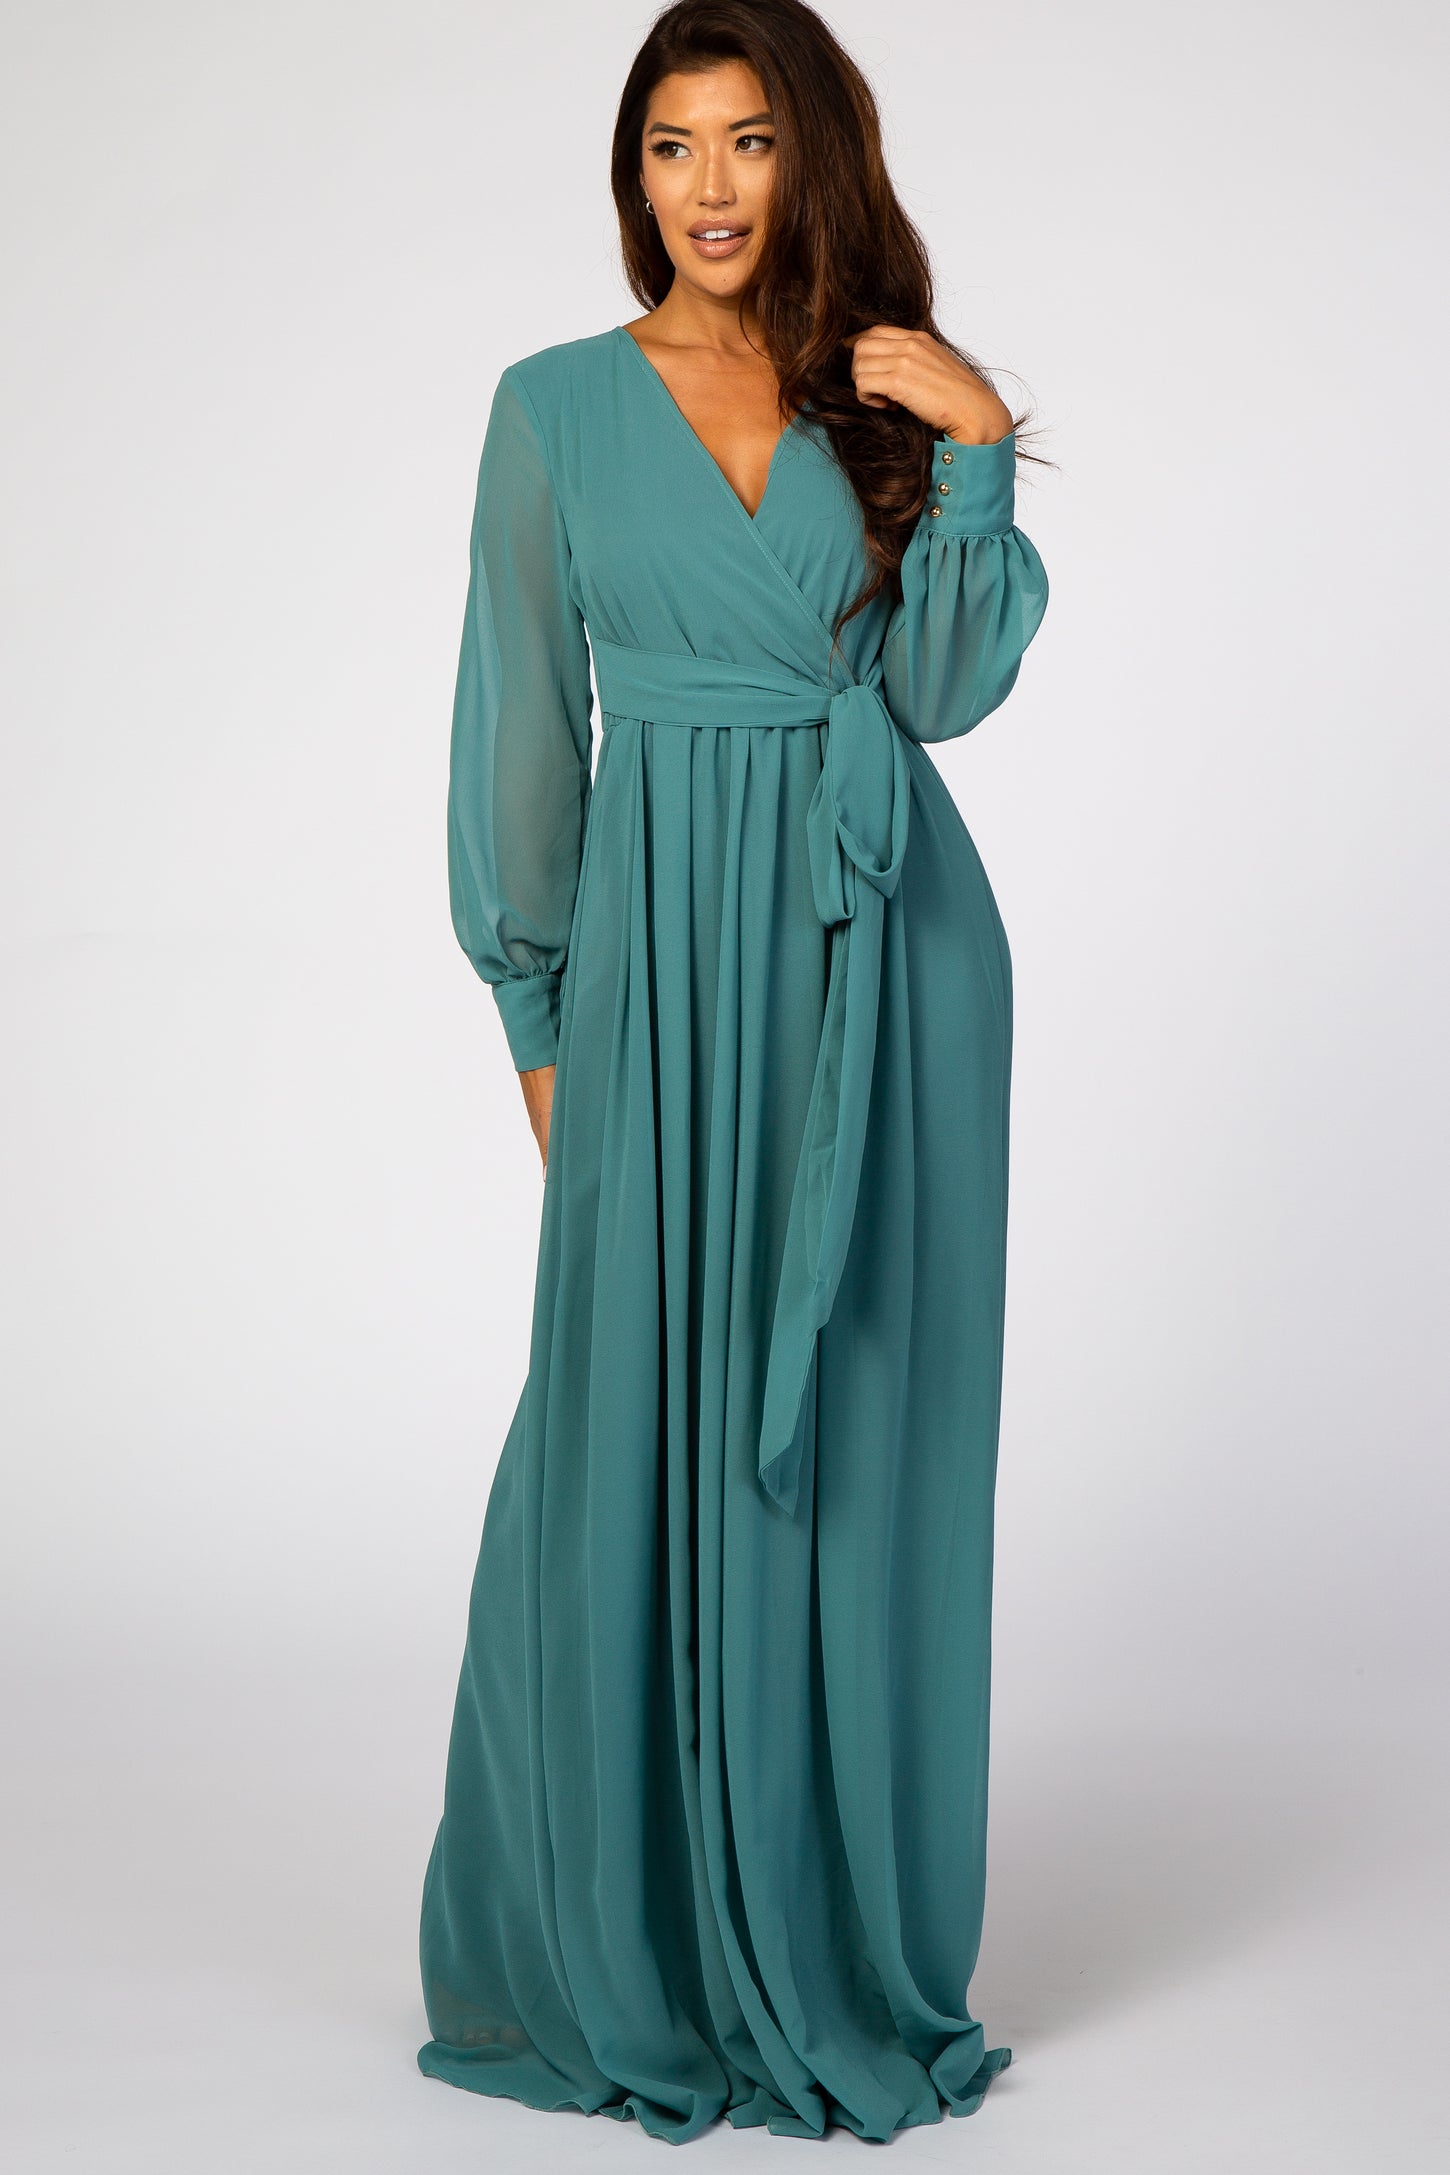 Jade Chiffon Long Sleeve Maternity Maxi Dress